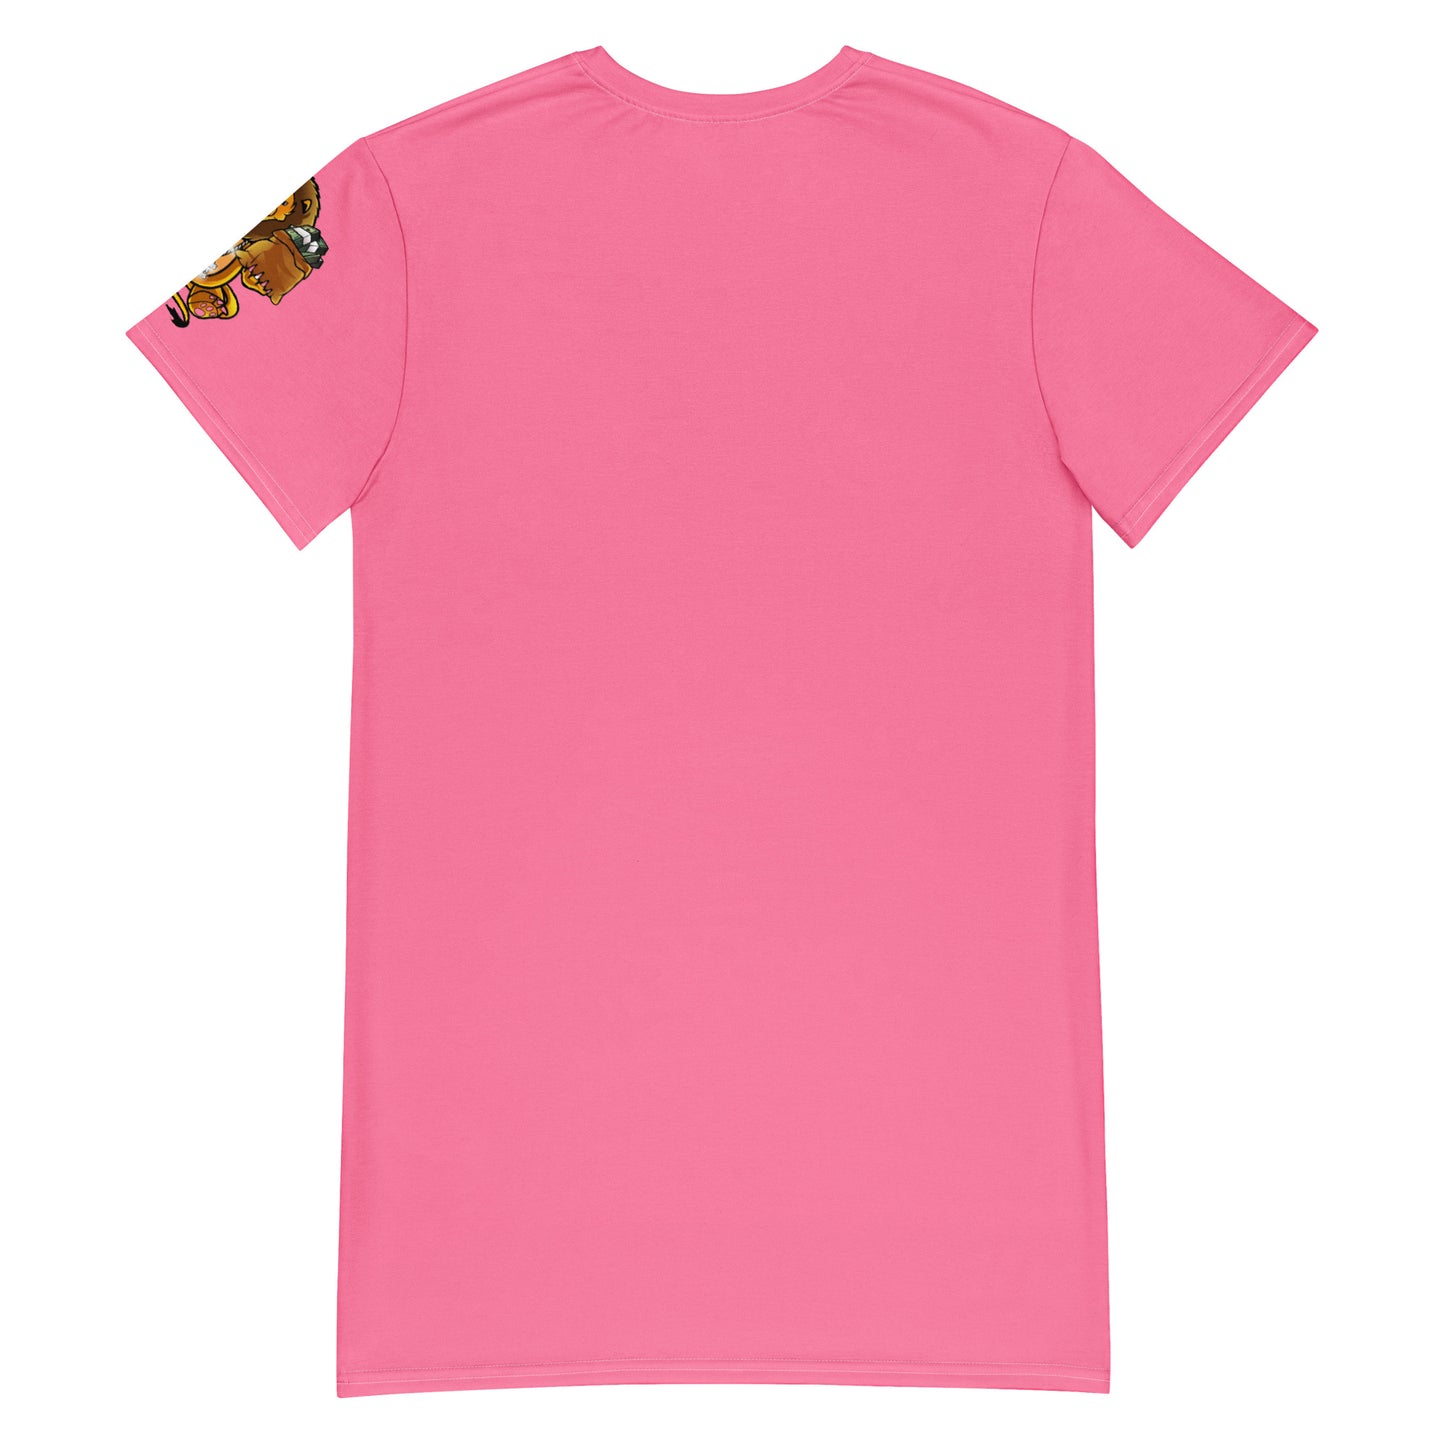 Same Goals Different Struggles Women’s Tickle Me Pink T-shirt dress